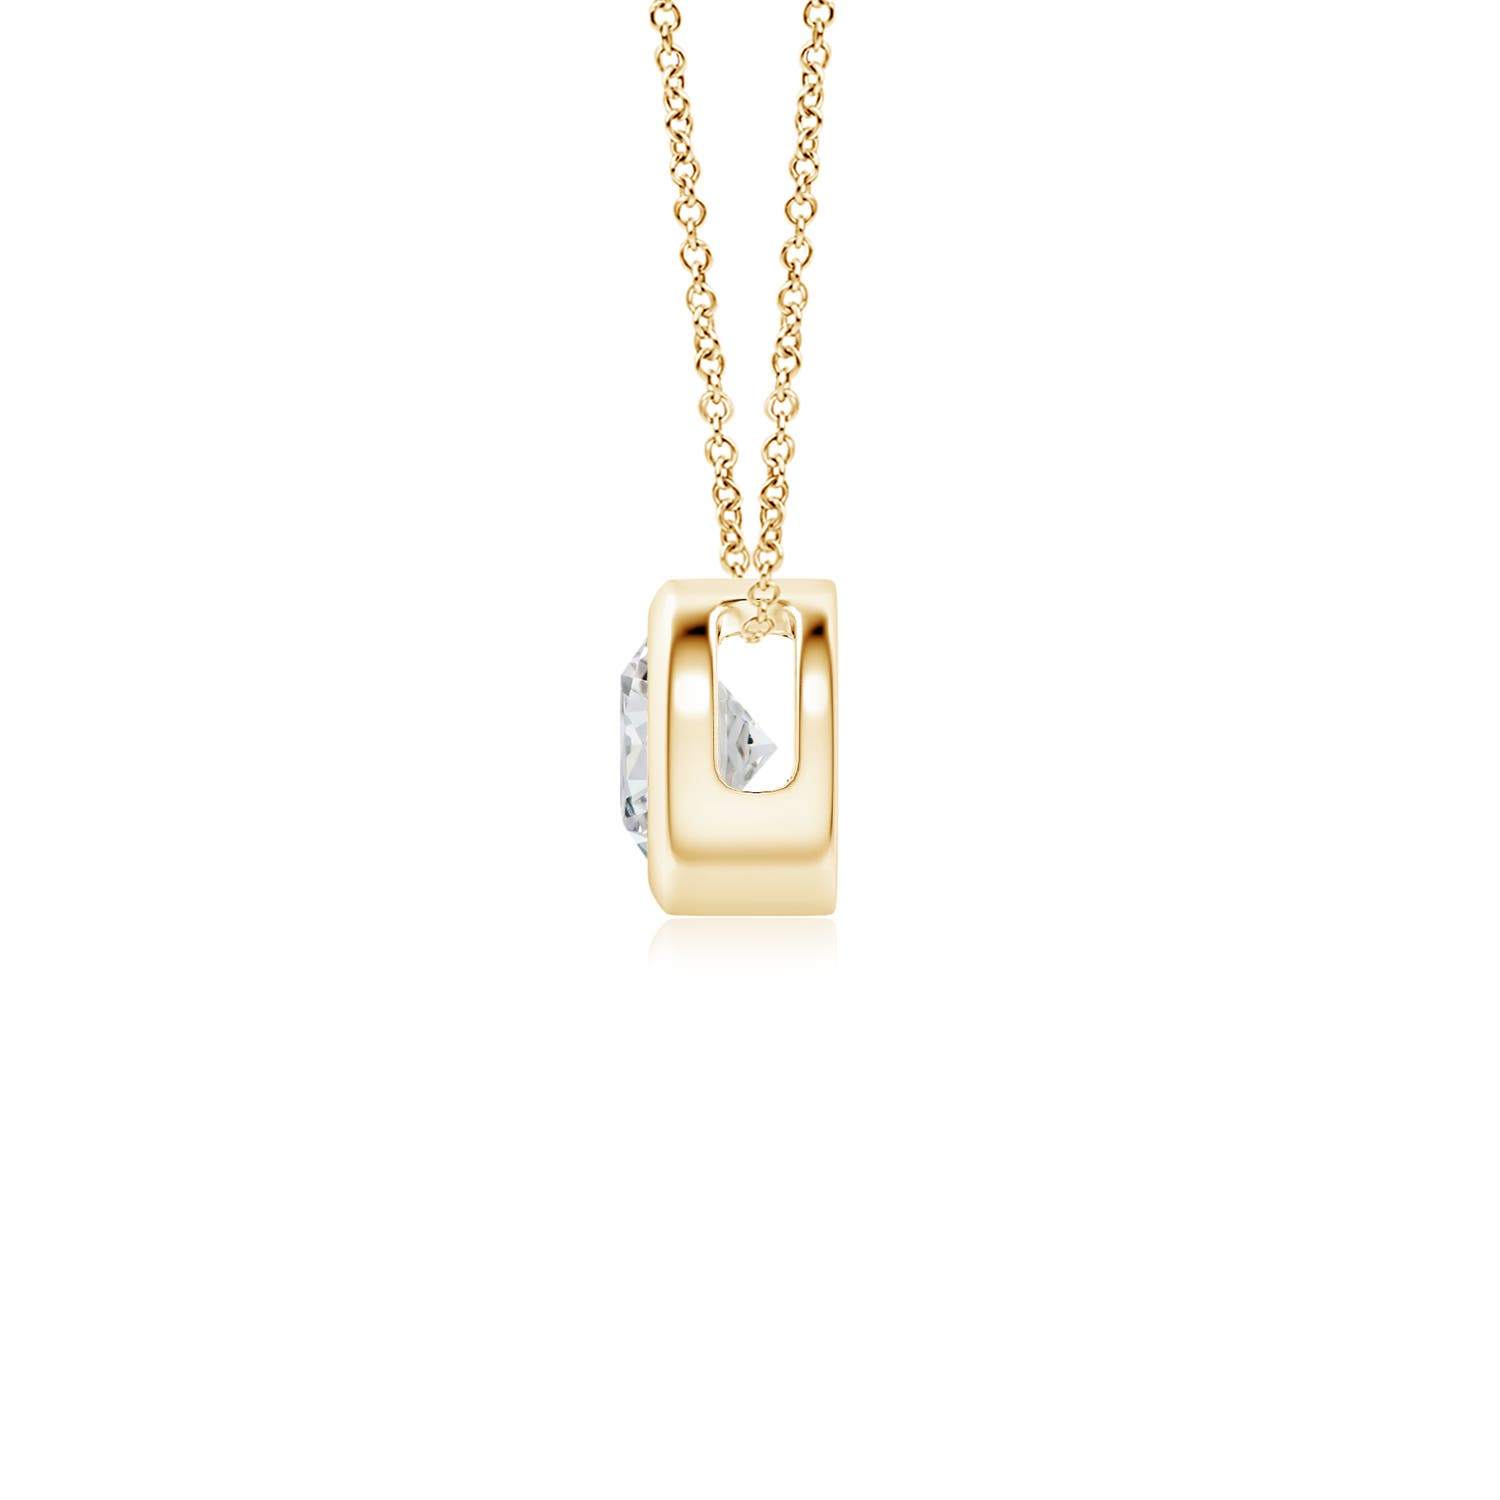 Shop Diamond Pendant Necklaces for Women | Angara